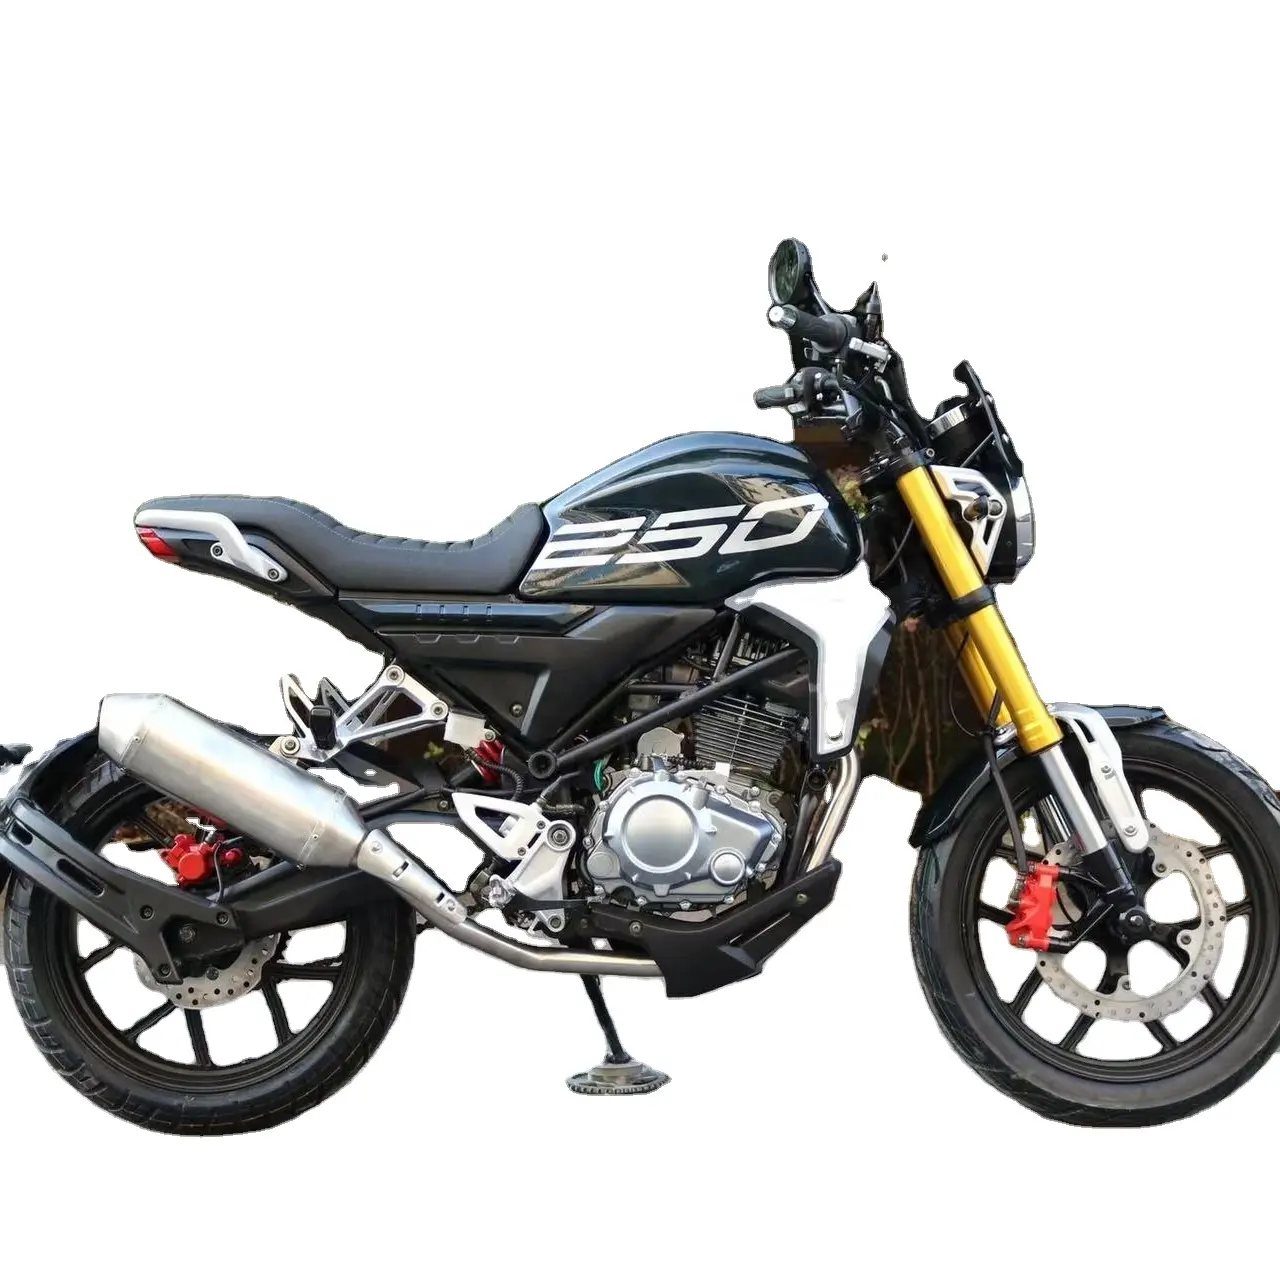 250cc Street Motorcycle Classic Design Re250cc Loncin Motor